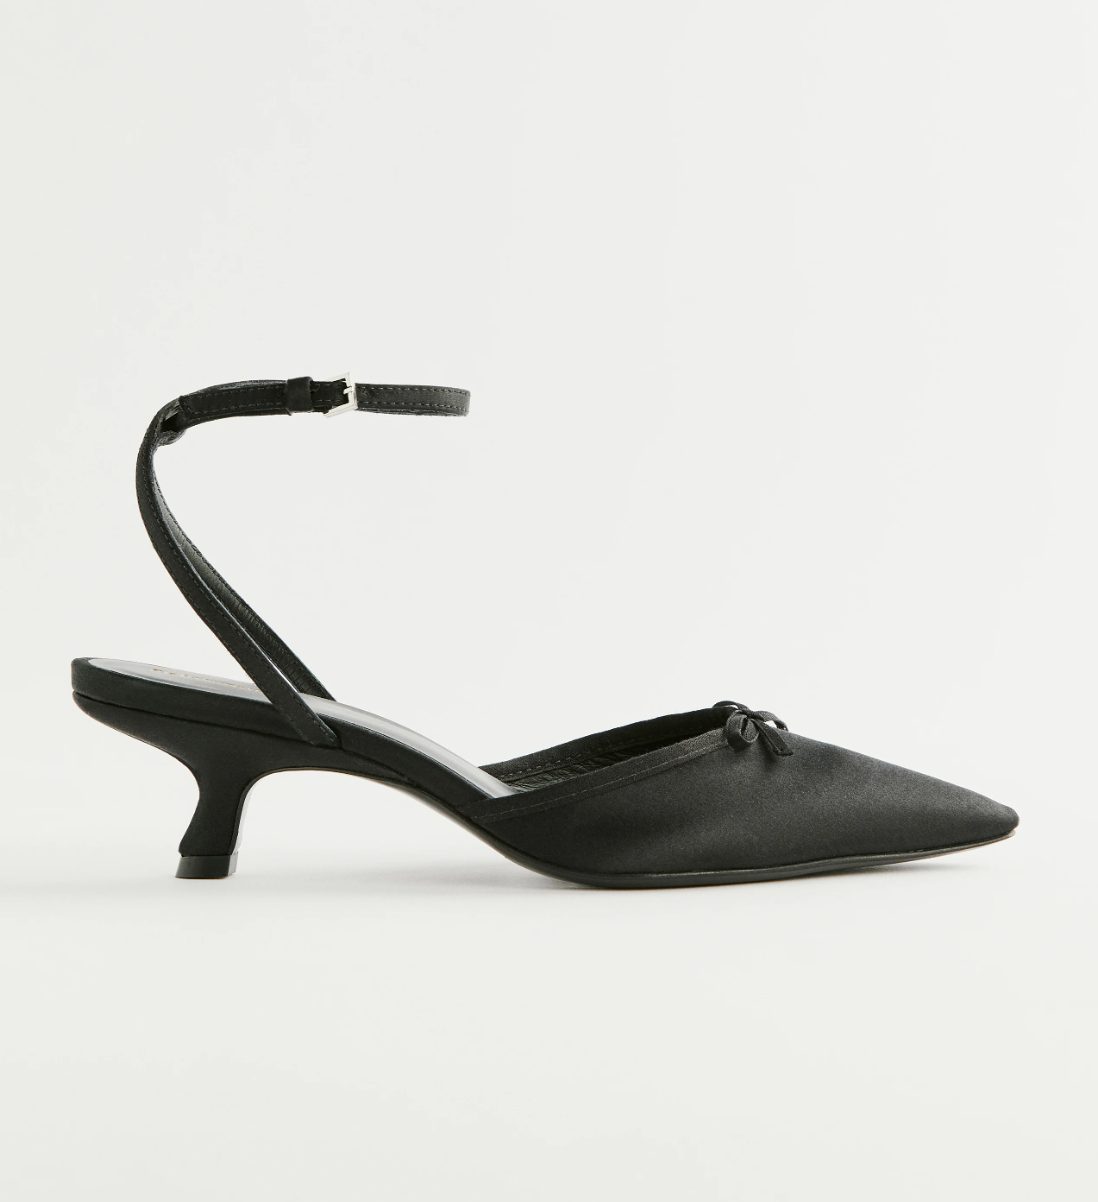 Kitten Heels Pointed Toe Genuine Leather Classy Pumps For Women | Pointed  toe shoes, Heels, Black pumps heels